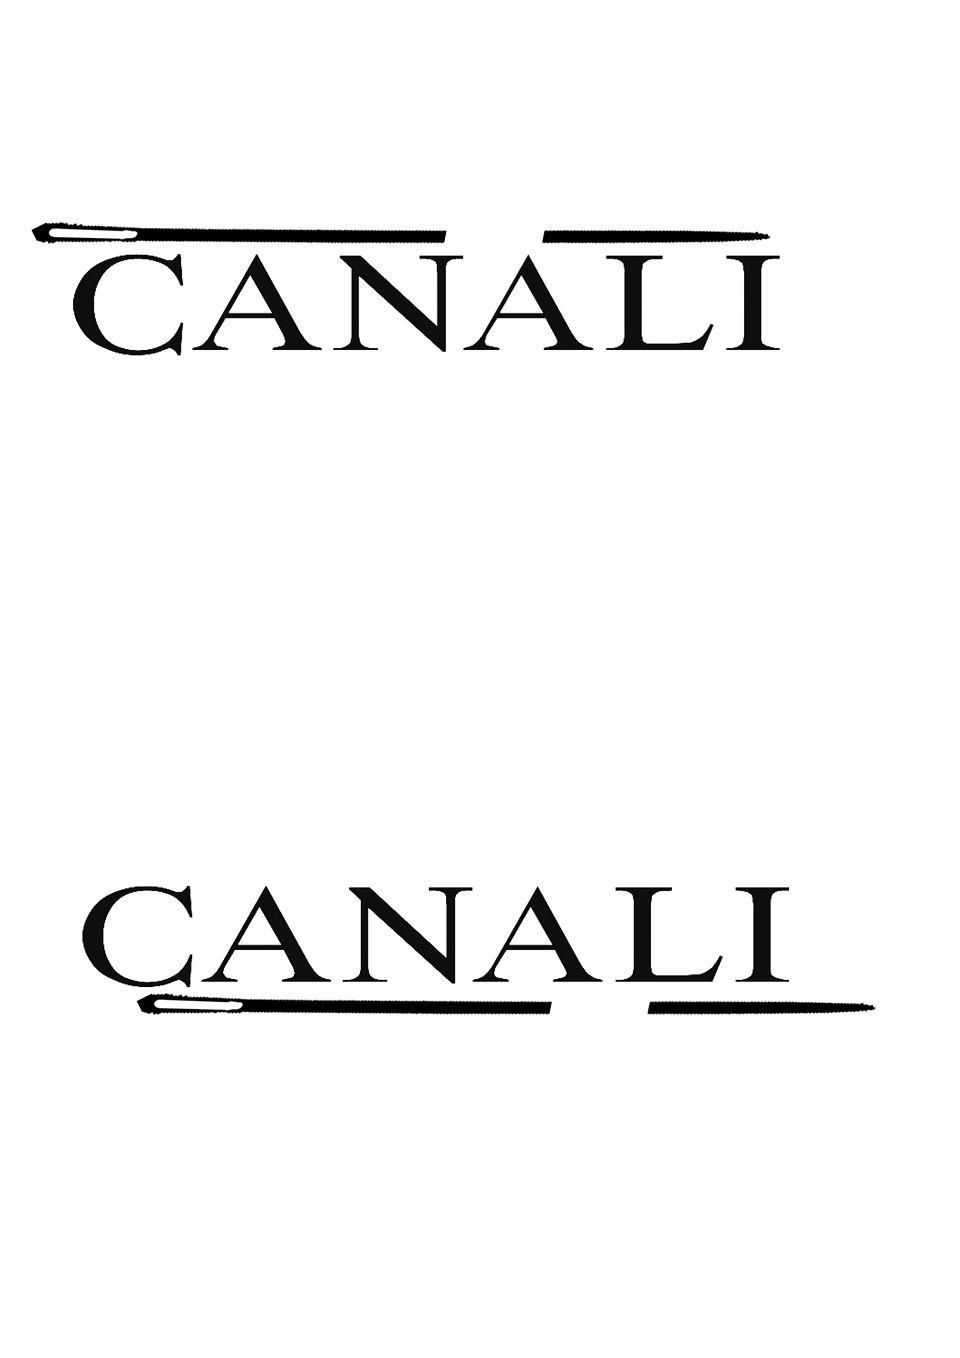 Canali Logo - CANALI MENSWEAR (CONCEPT LOGO DESIGN) by Adriana Manzella for CANALI